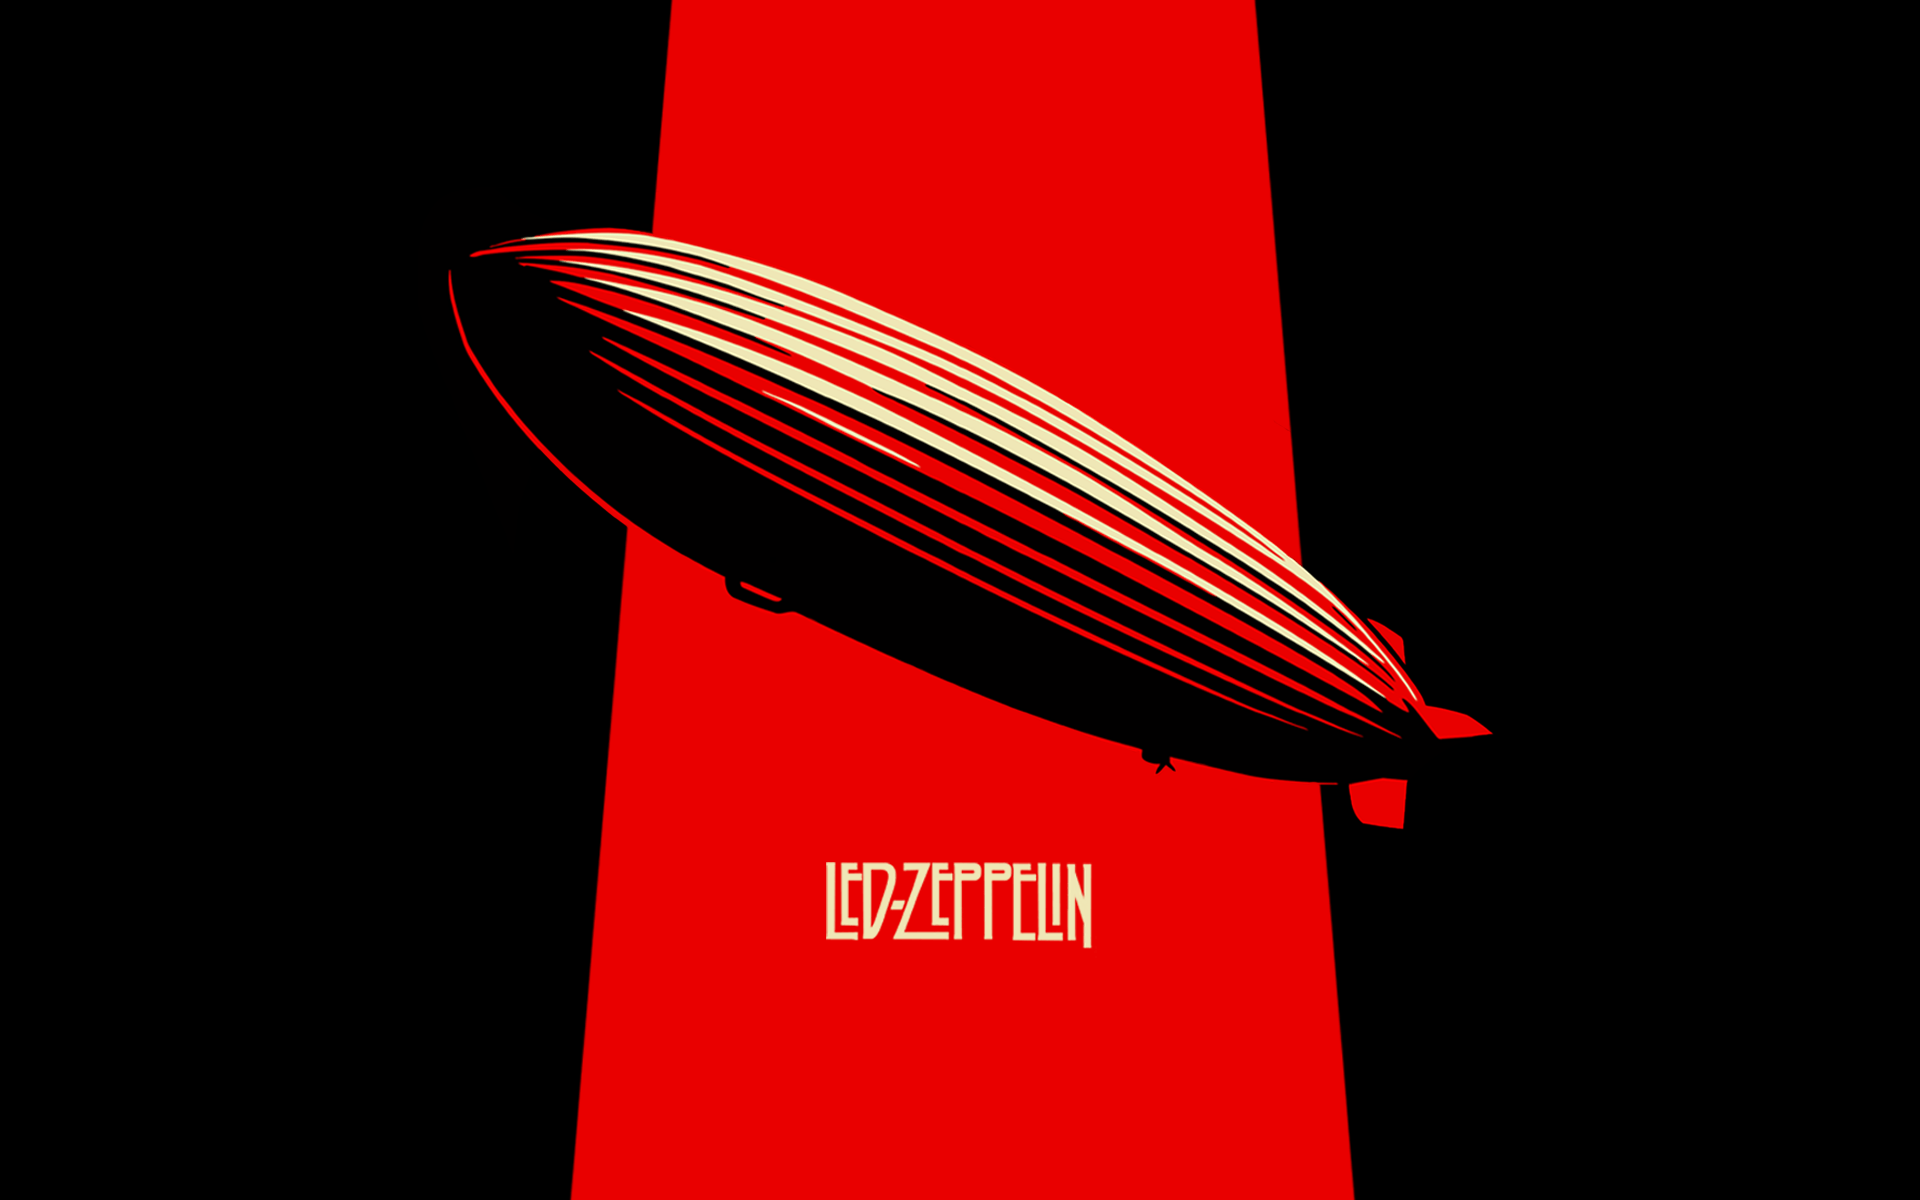 Led Zeppelin Wallpapers - Wallpaper Cave